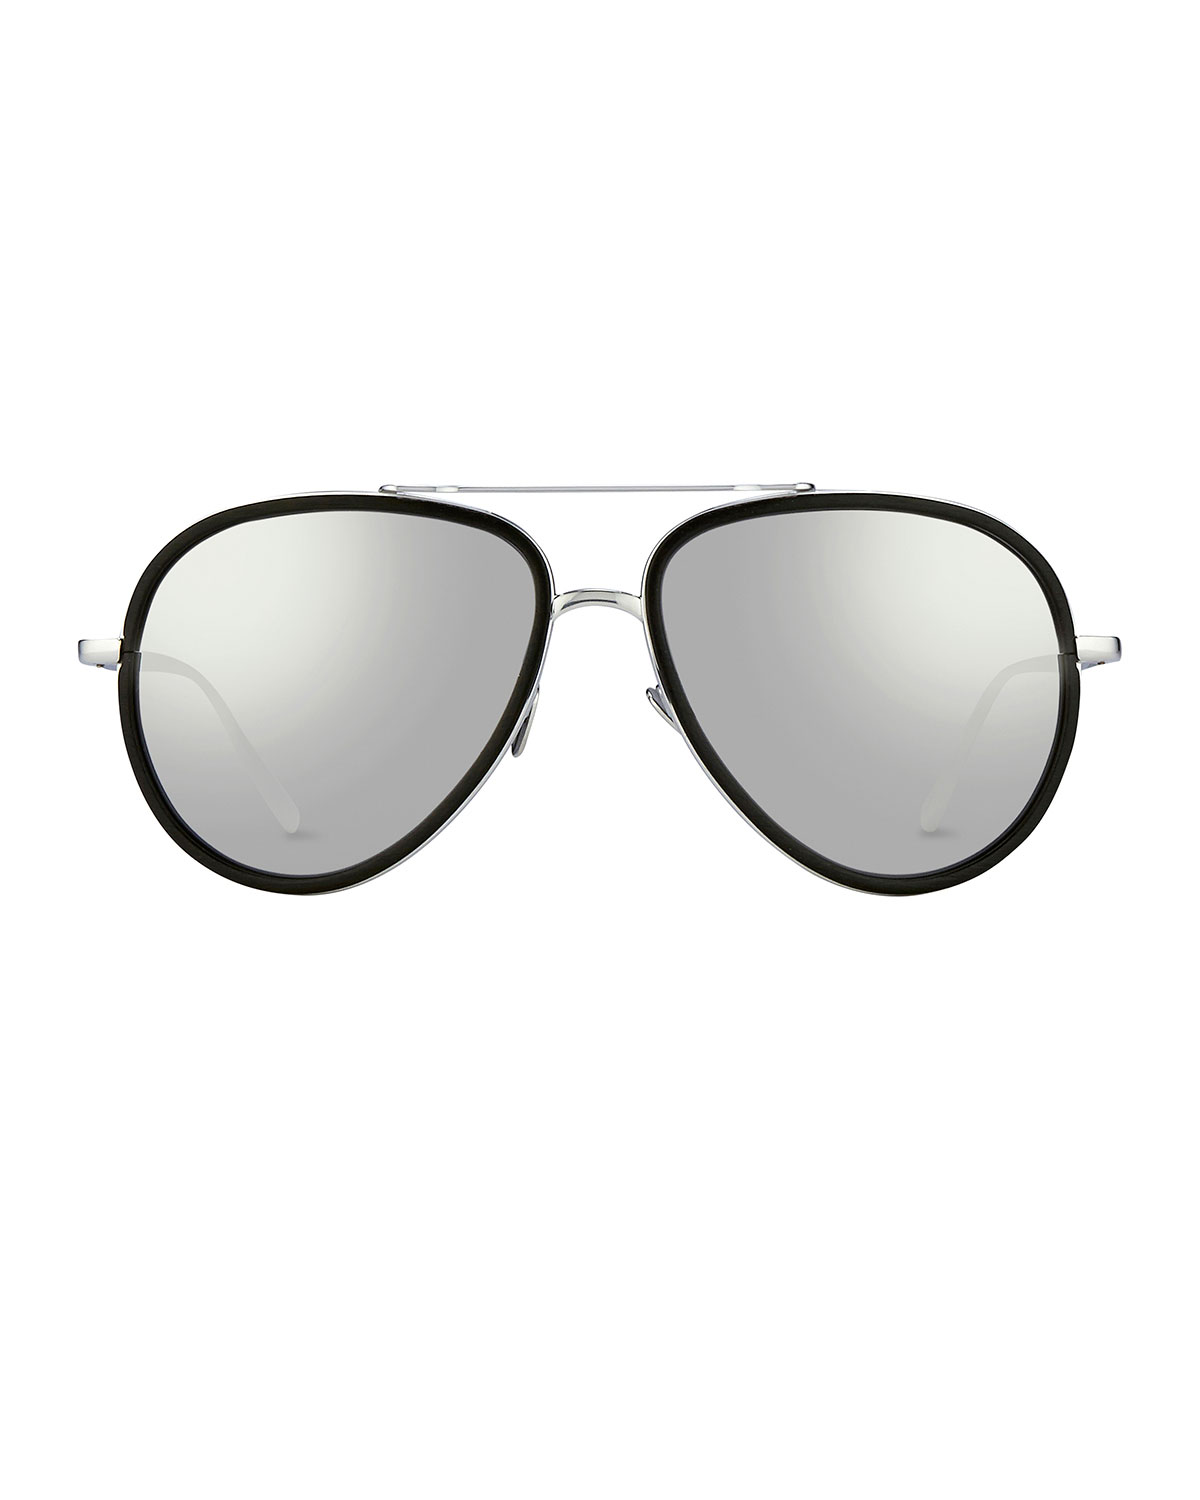 Two-Tone Aviator Sunglasses, White Gold/Platinum